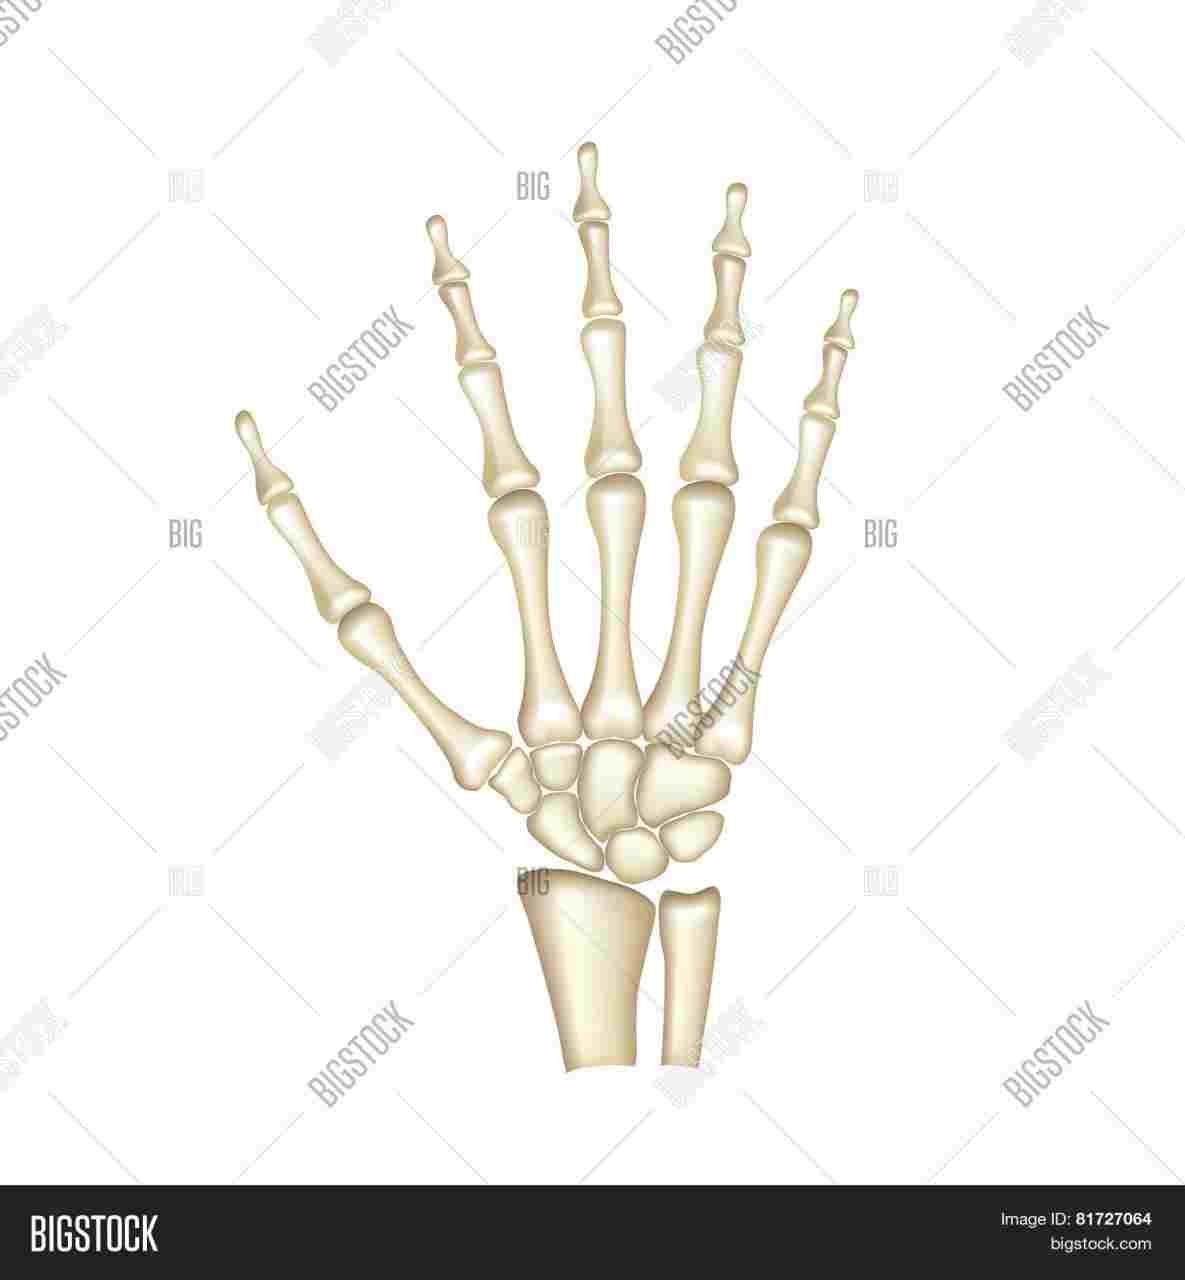 Diagram Of Hand Bones Hand Bones Anatomy Diagram Anatomy Body